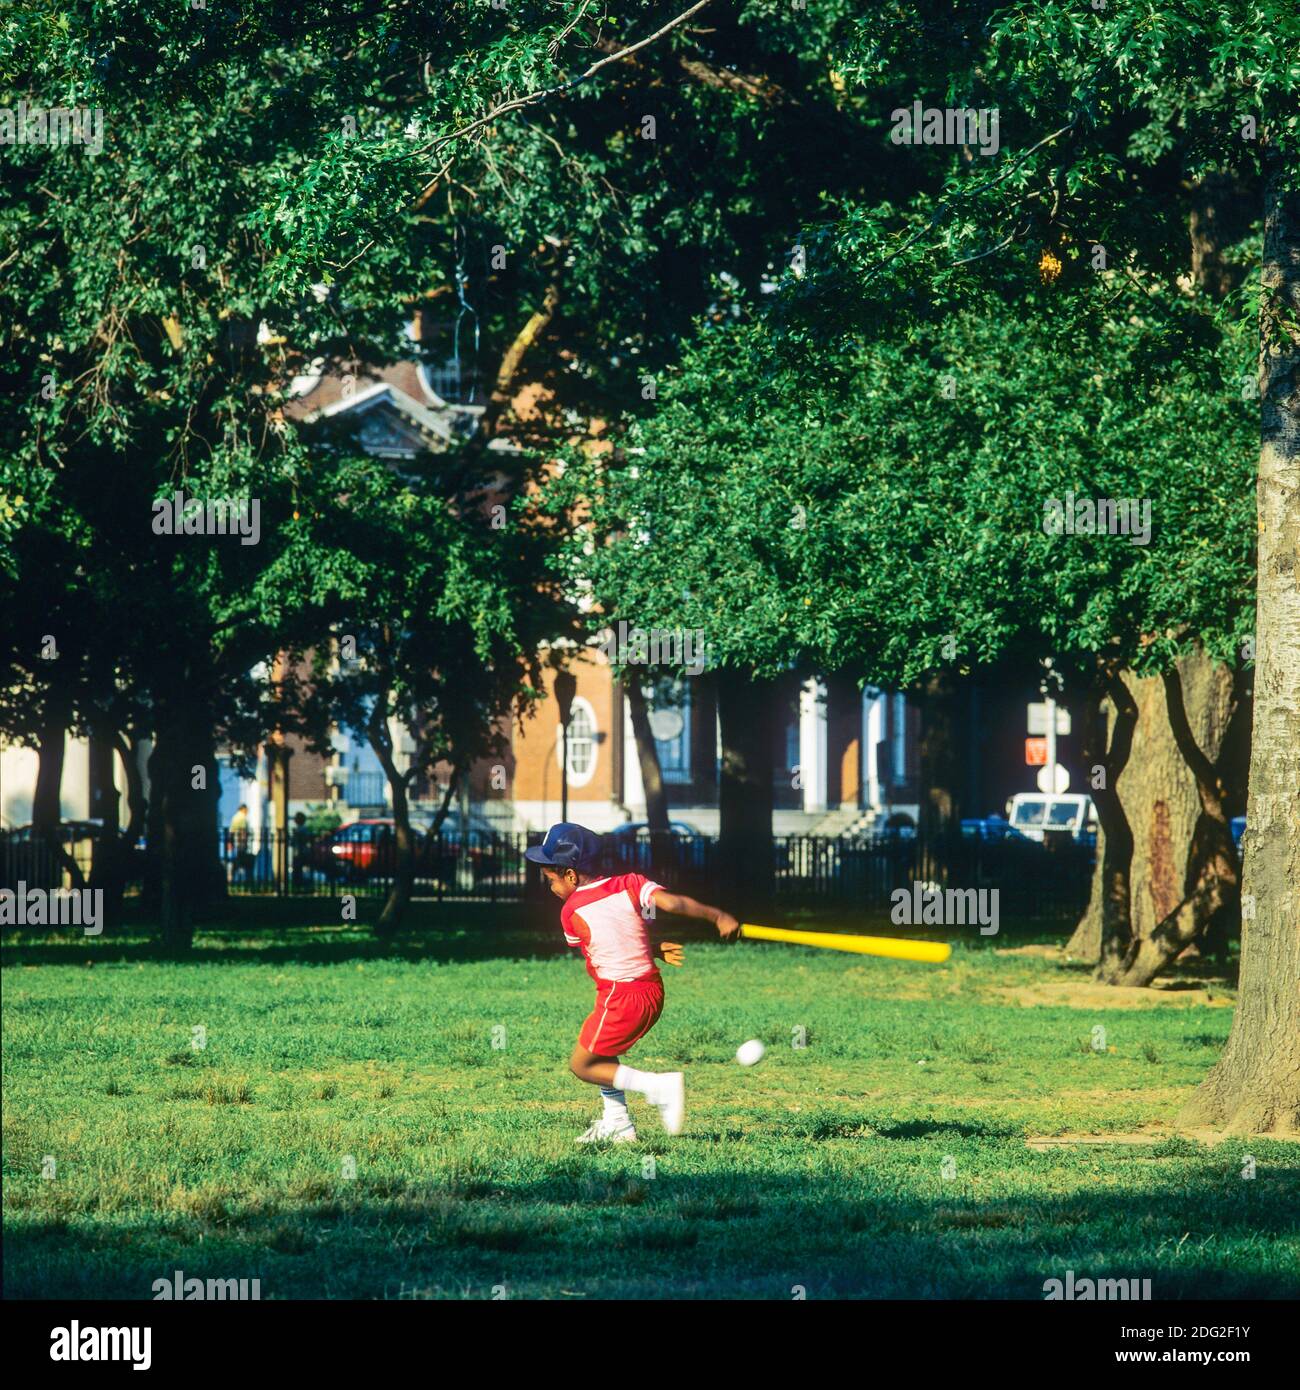 New York 1985, Little African American boy playing baseball, swinging baseball bat, Battery park, lower Manhattan, New York City, NY, NYC, USA, Stock Photo